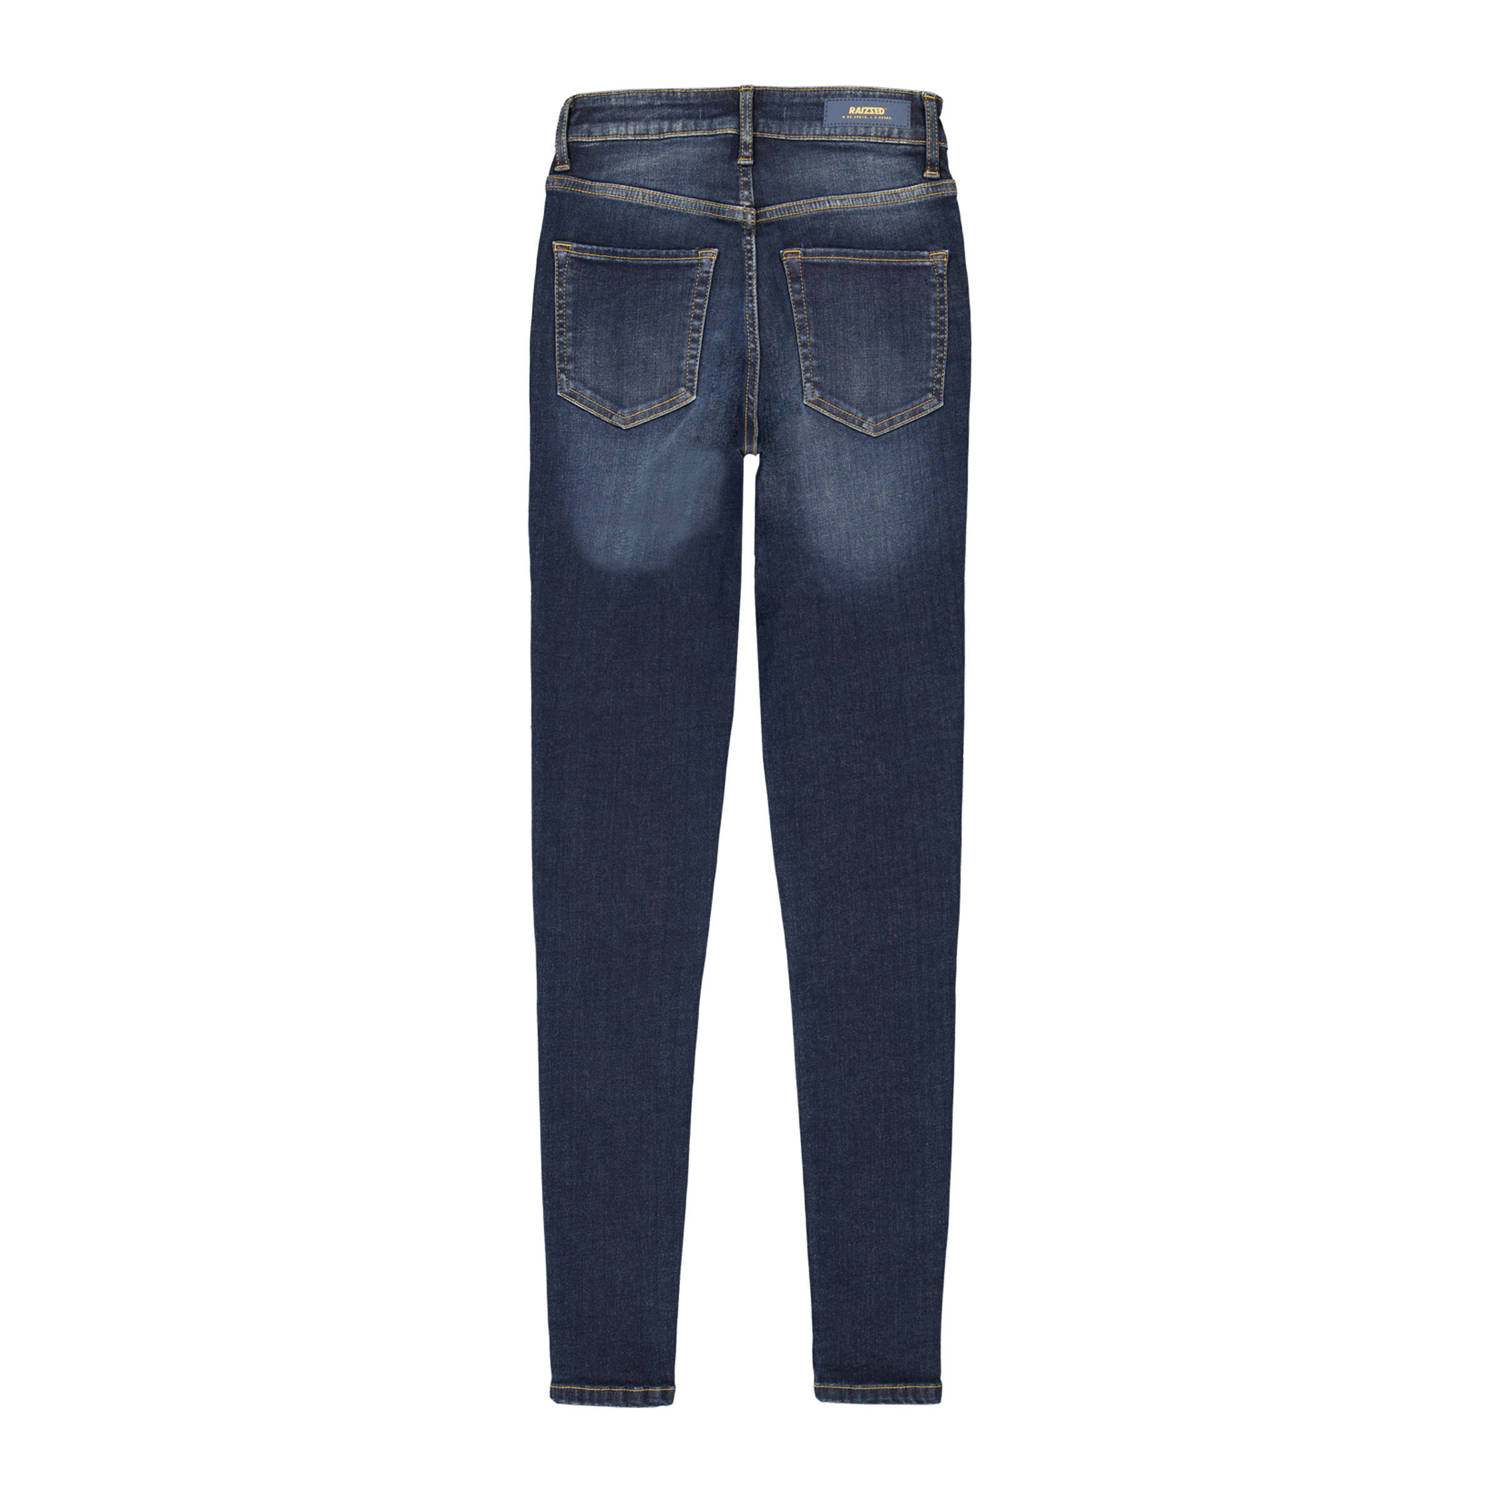 Raizzed high waist skinny jeans Blossom dark blue denim